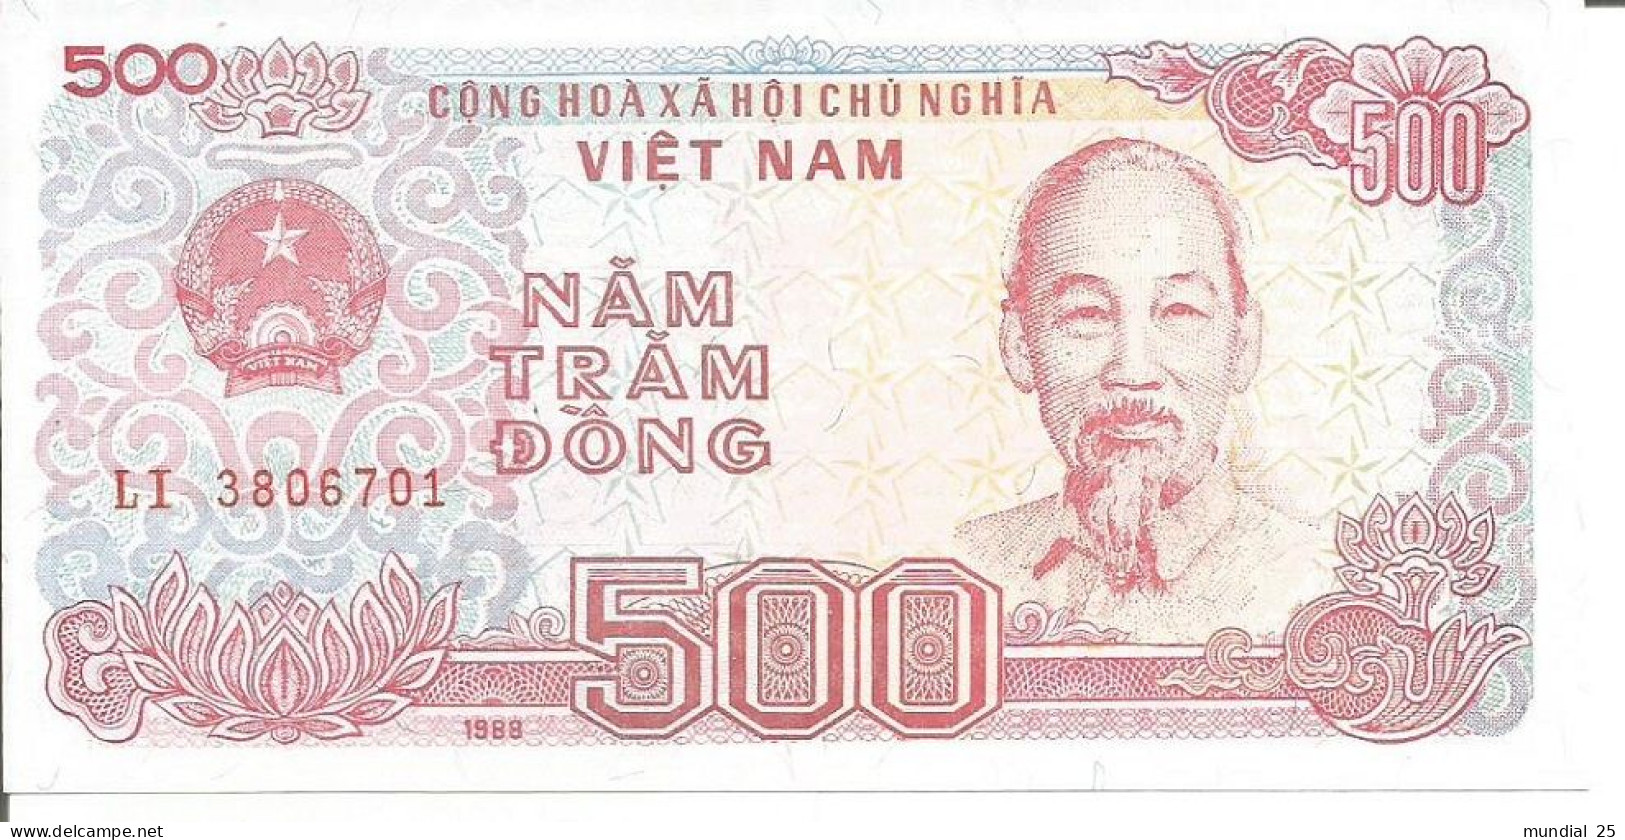 3 VIETNAM NOTES 500 DONG 1988 - Viêt-Nam